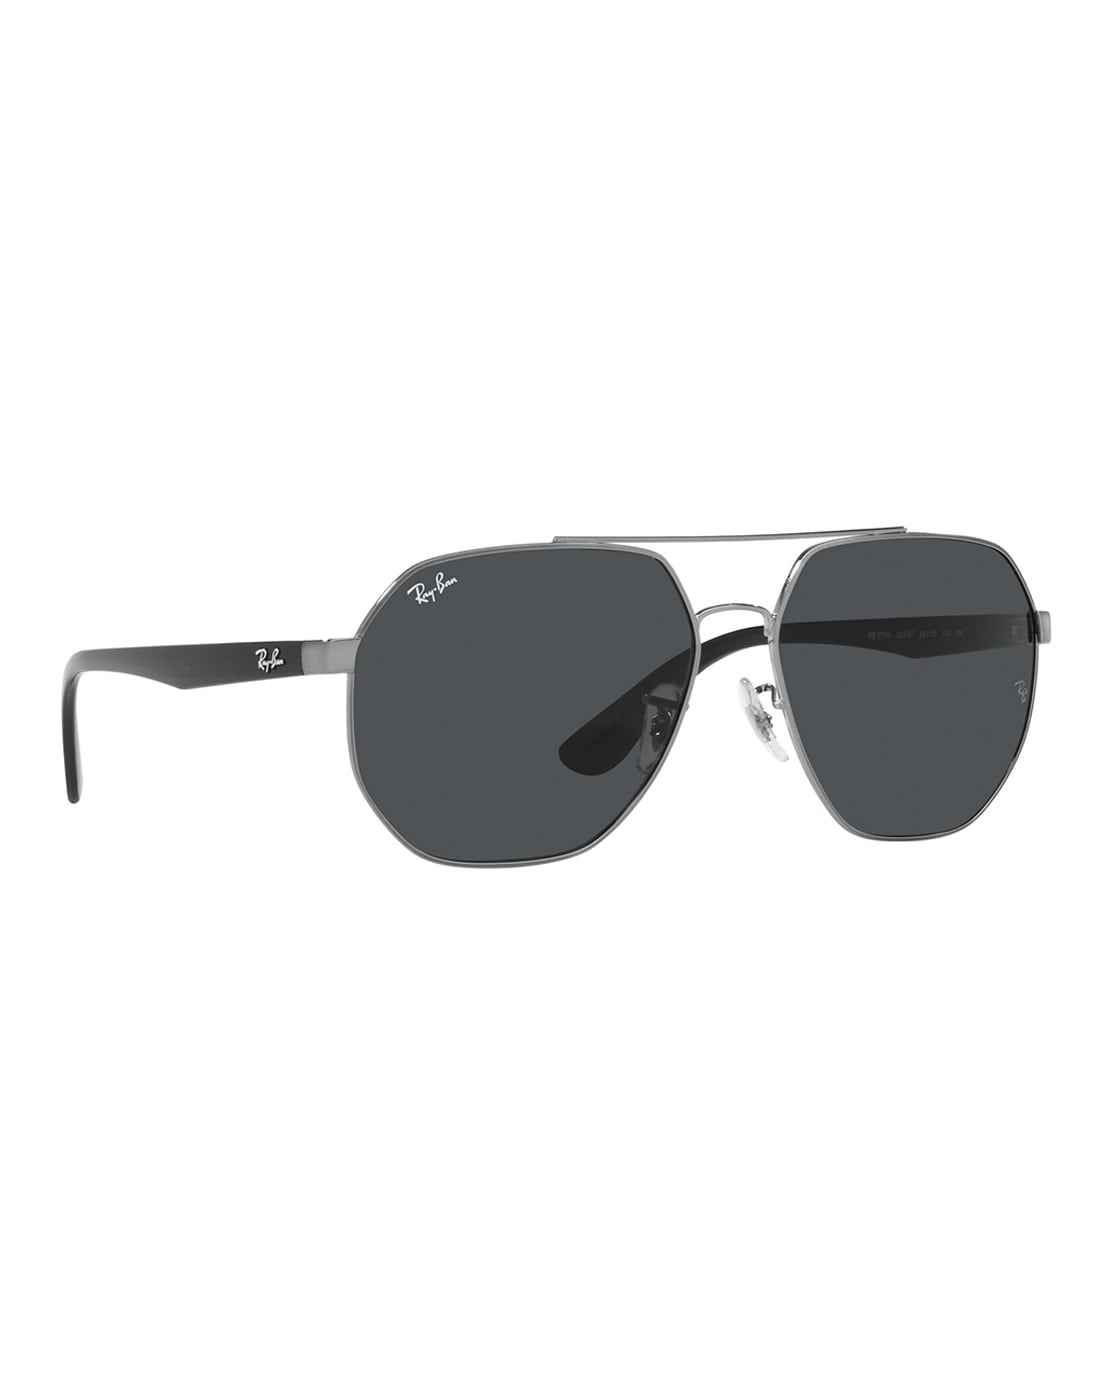 Buy Ray Ban Men Sports Sunglasses 0RB4265601SA162 - Sunglasses for Men  4118101 | Myntra